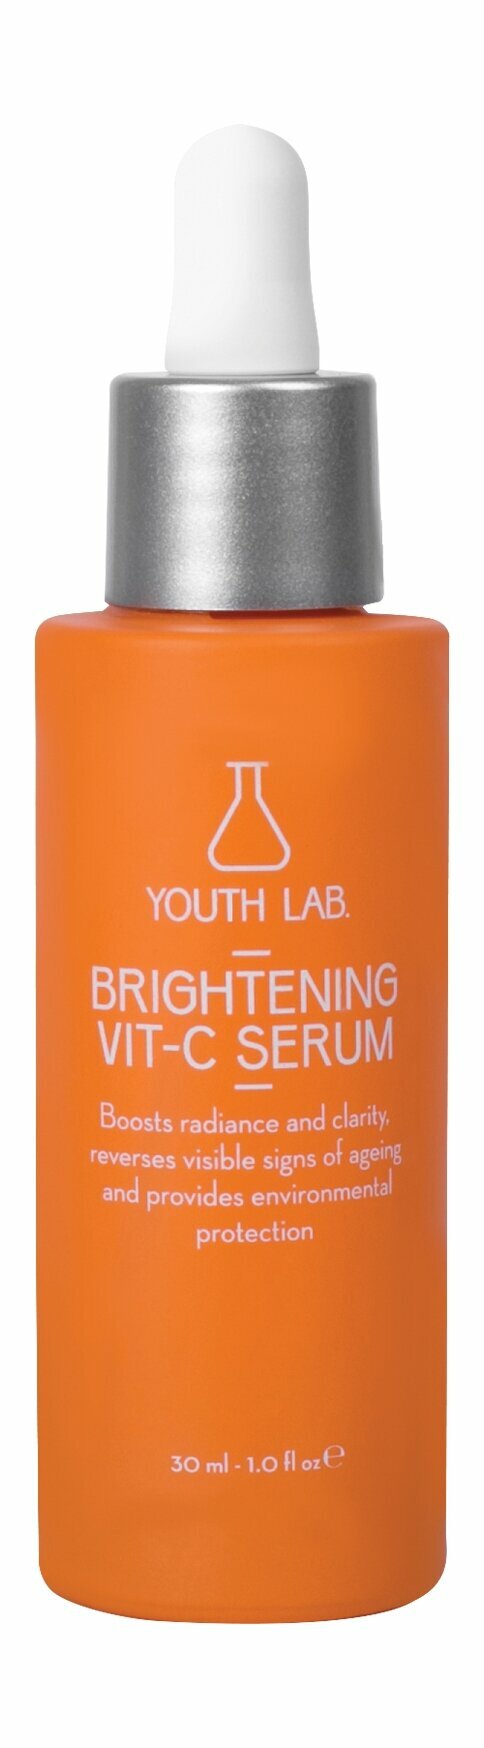 YOUTH LAB Brightening Vit-C Serum Сыворотка для лица Сияние, 30 мл